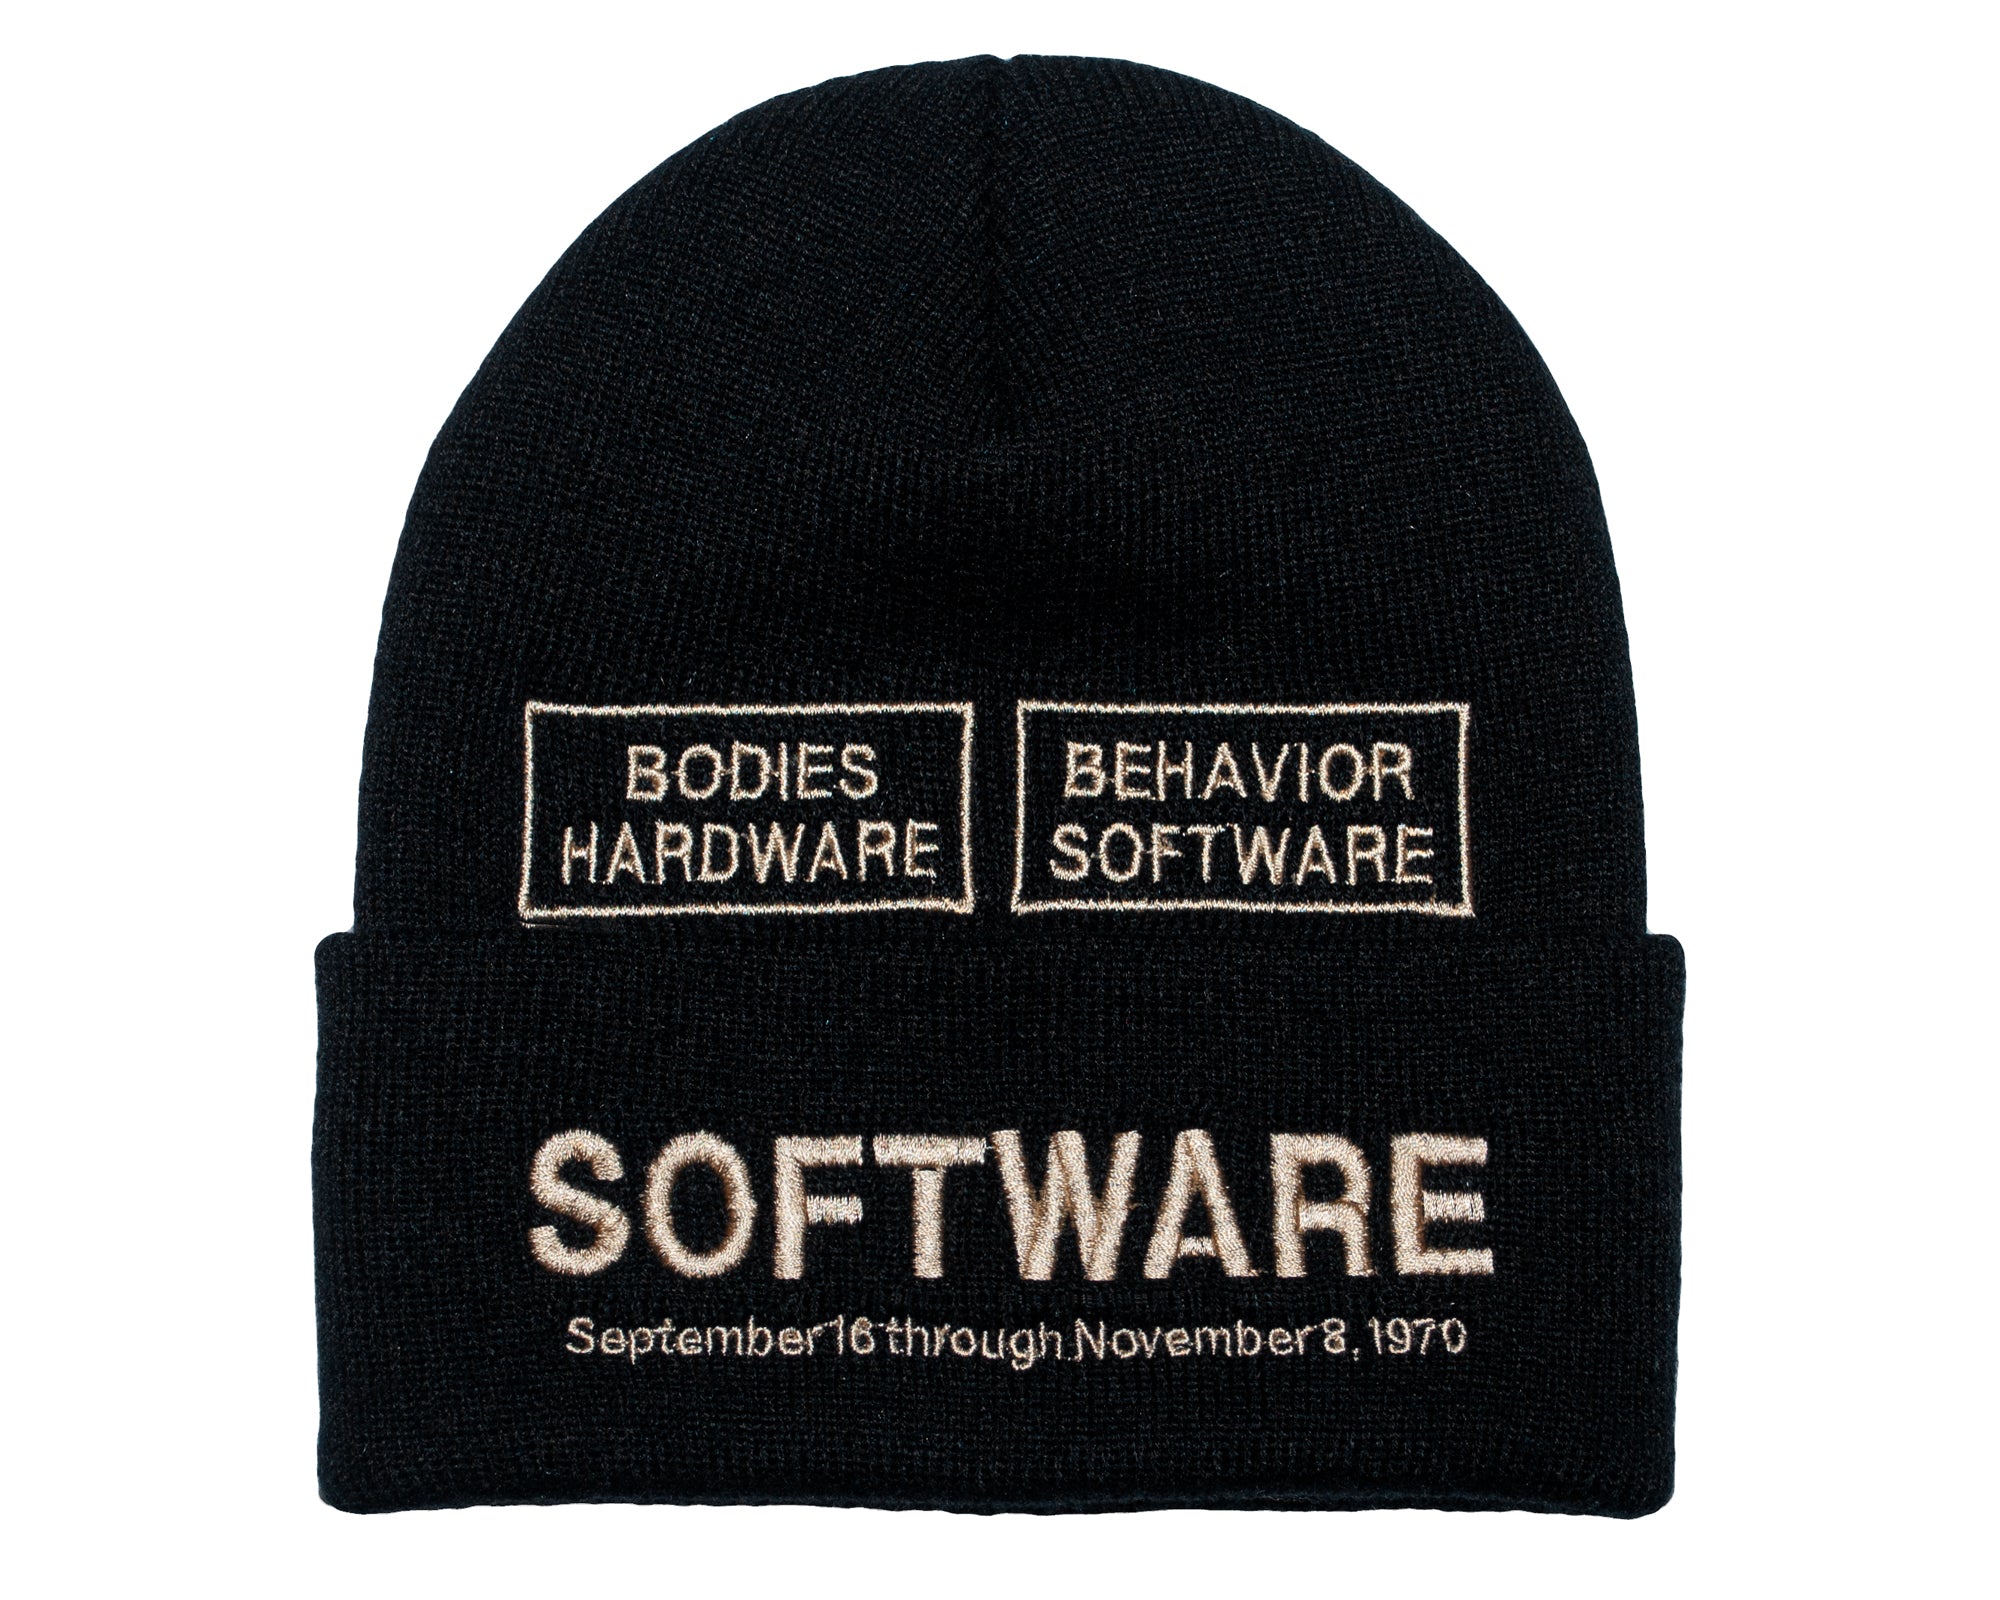 Software / Information